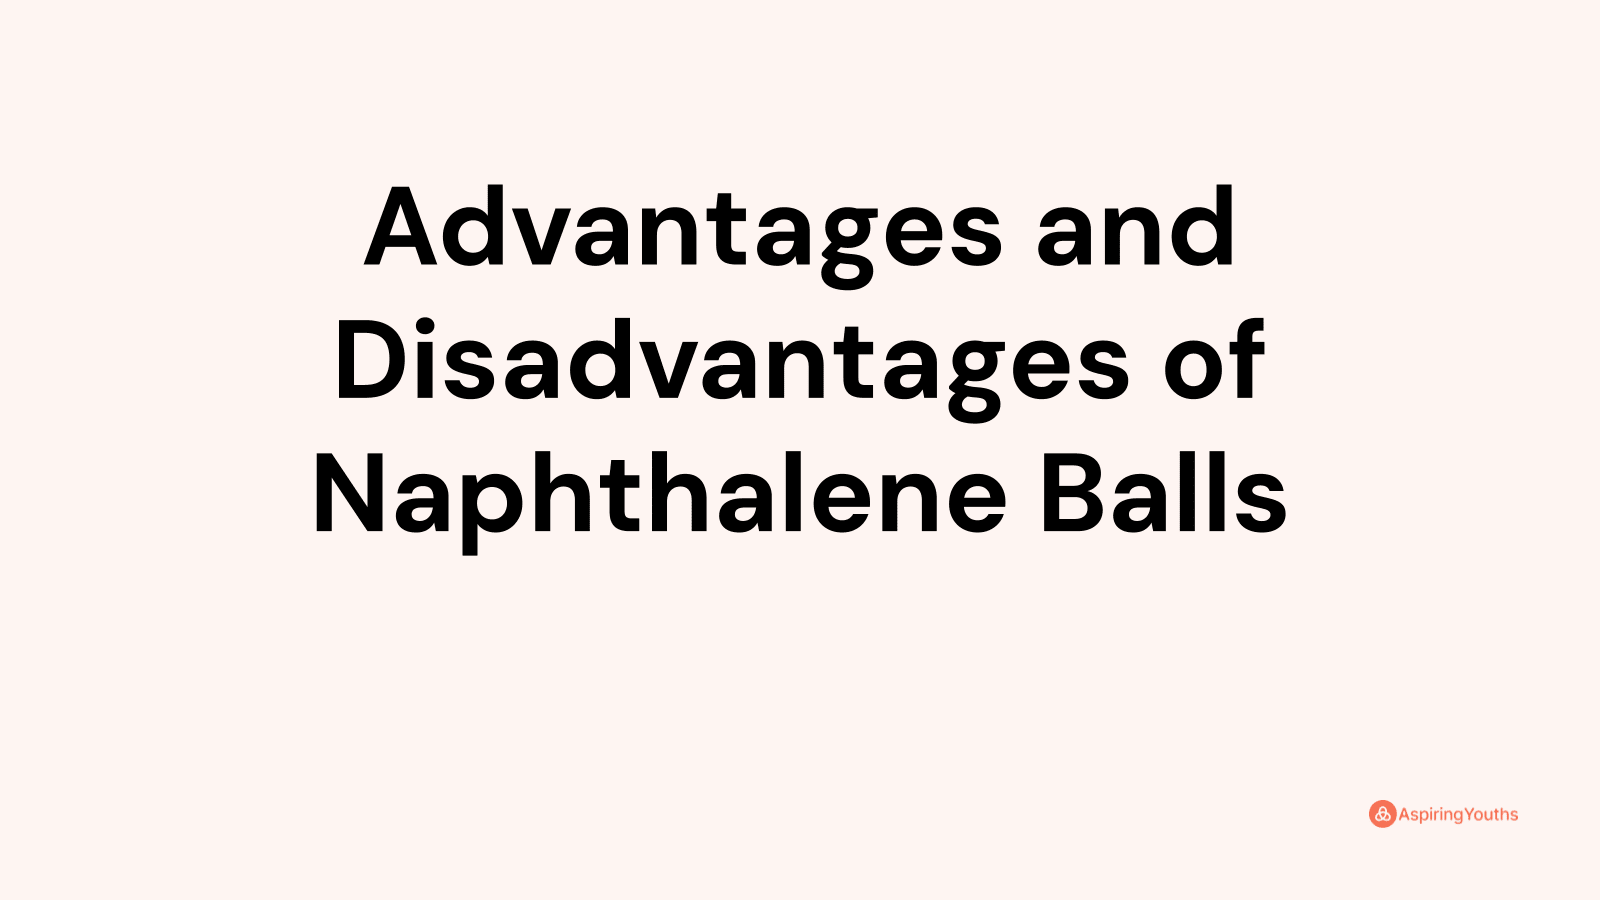 Advantages and disadvantages of Naphthalene Balls